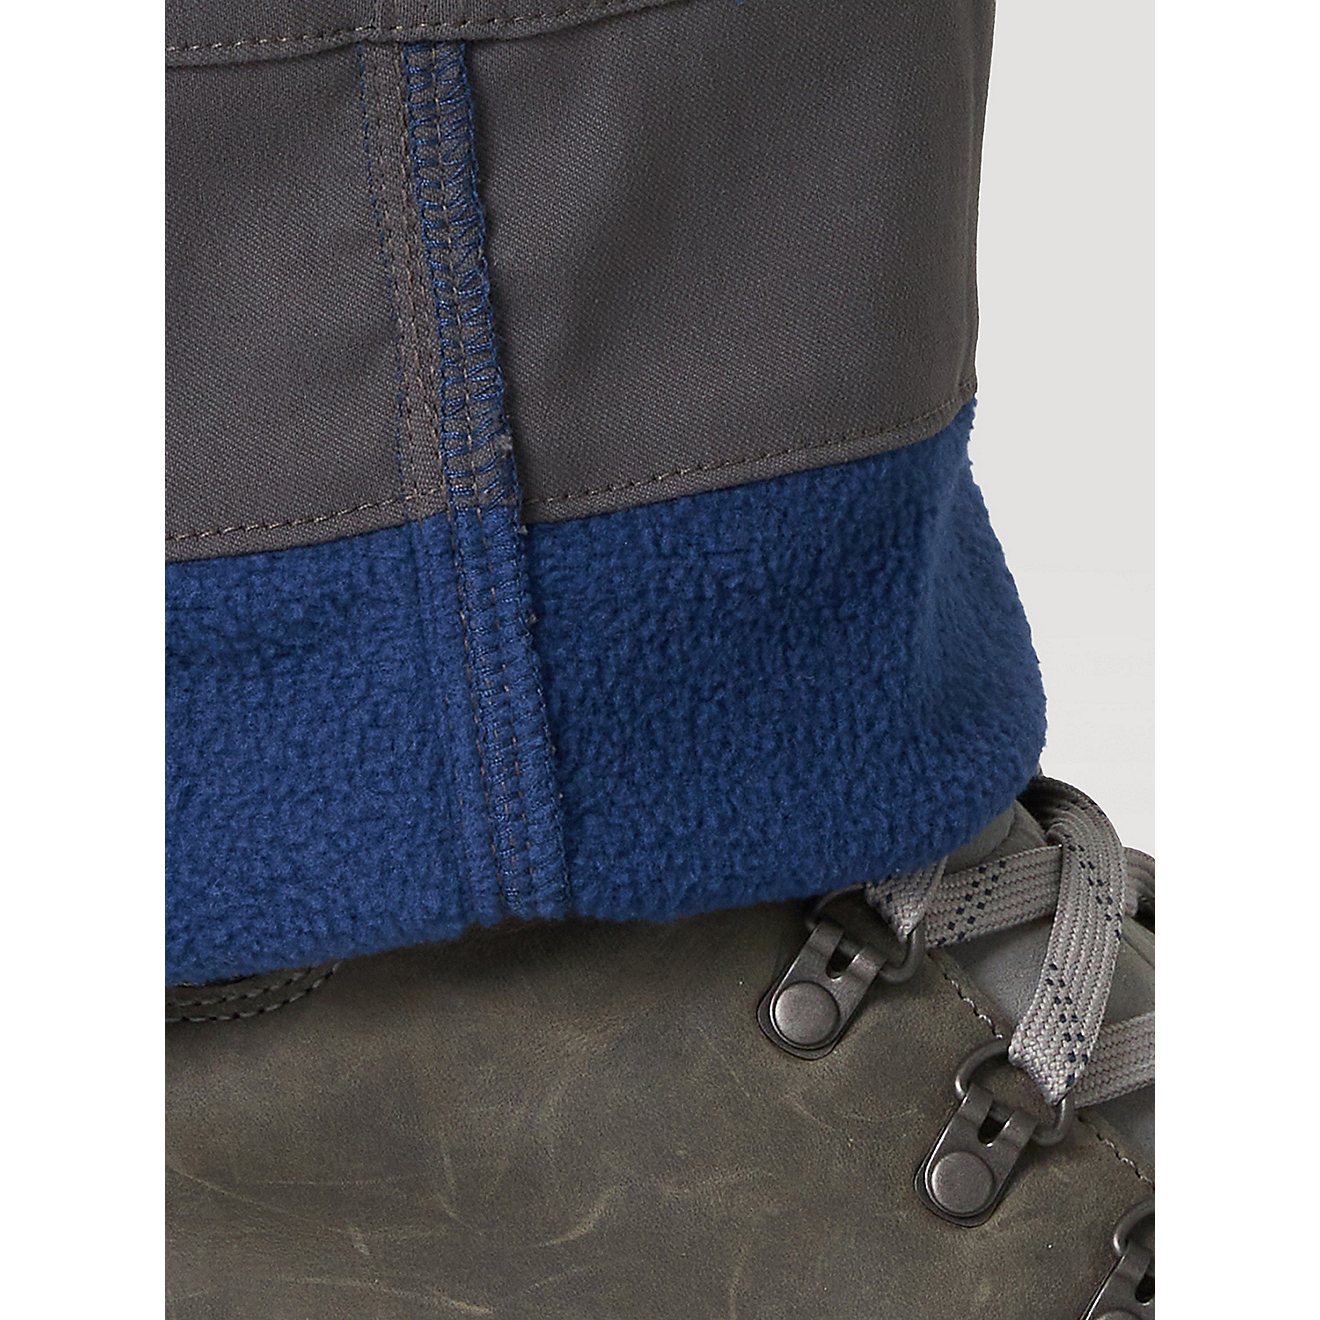 Wrangler Men's ATG Fleece Lined Utility Pants                                                                                    - view number 10